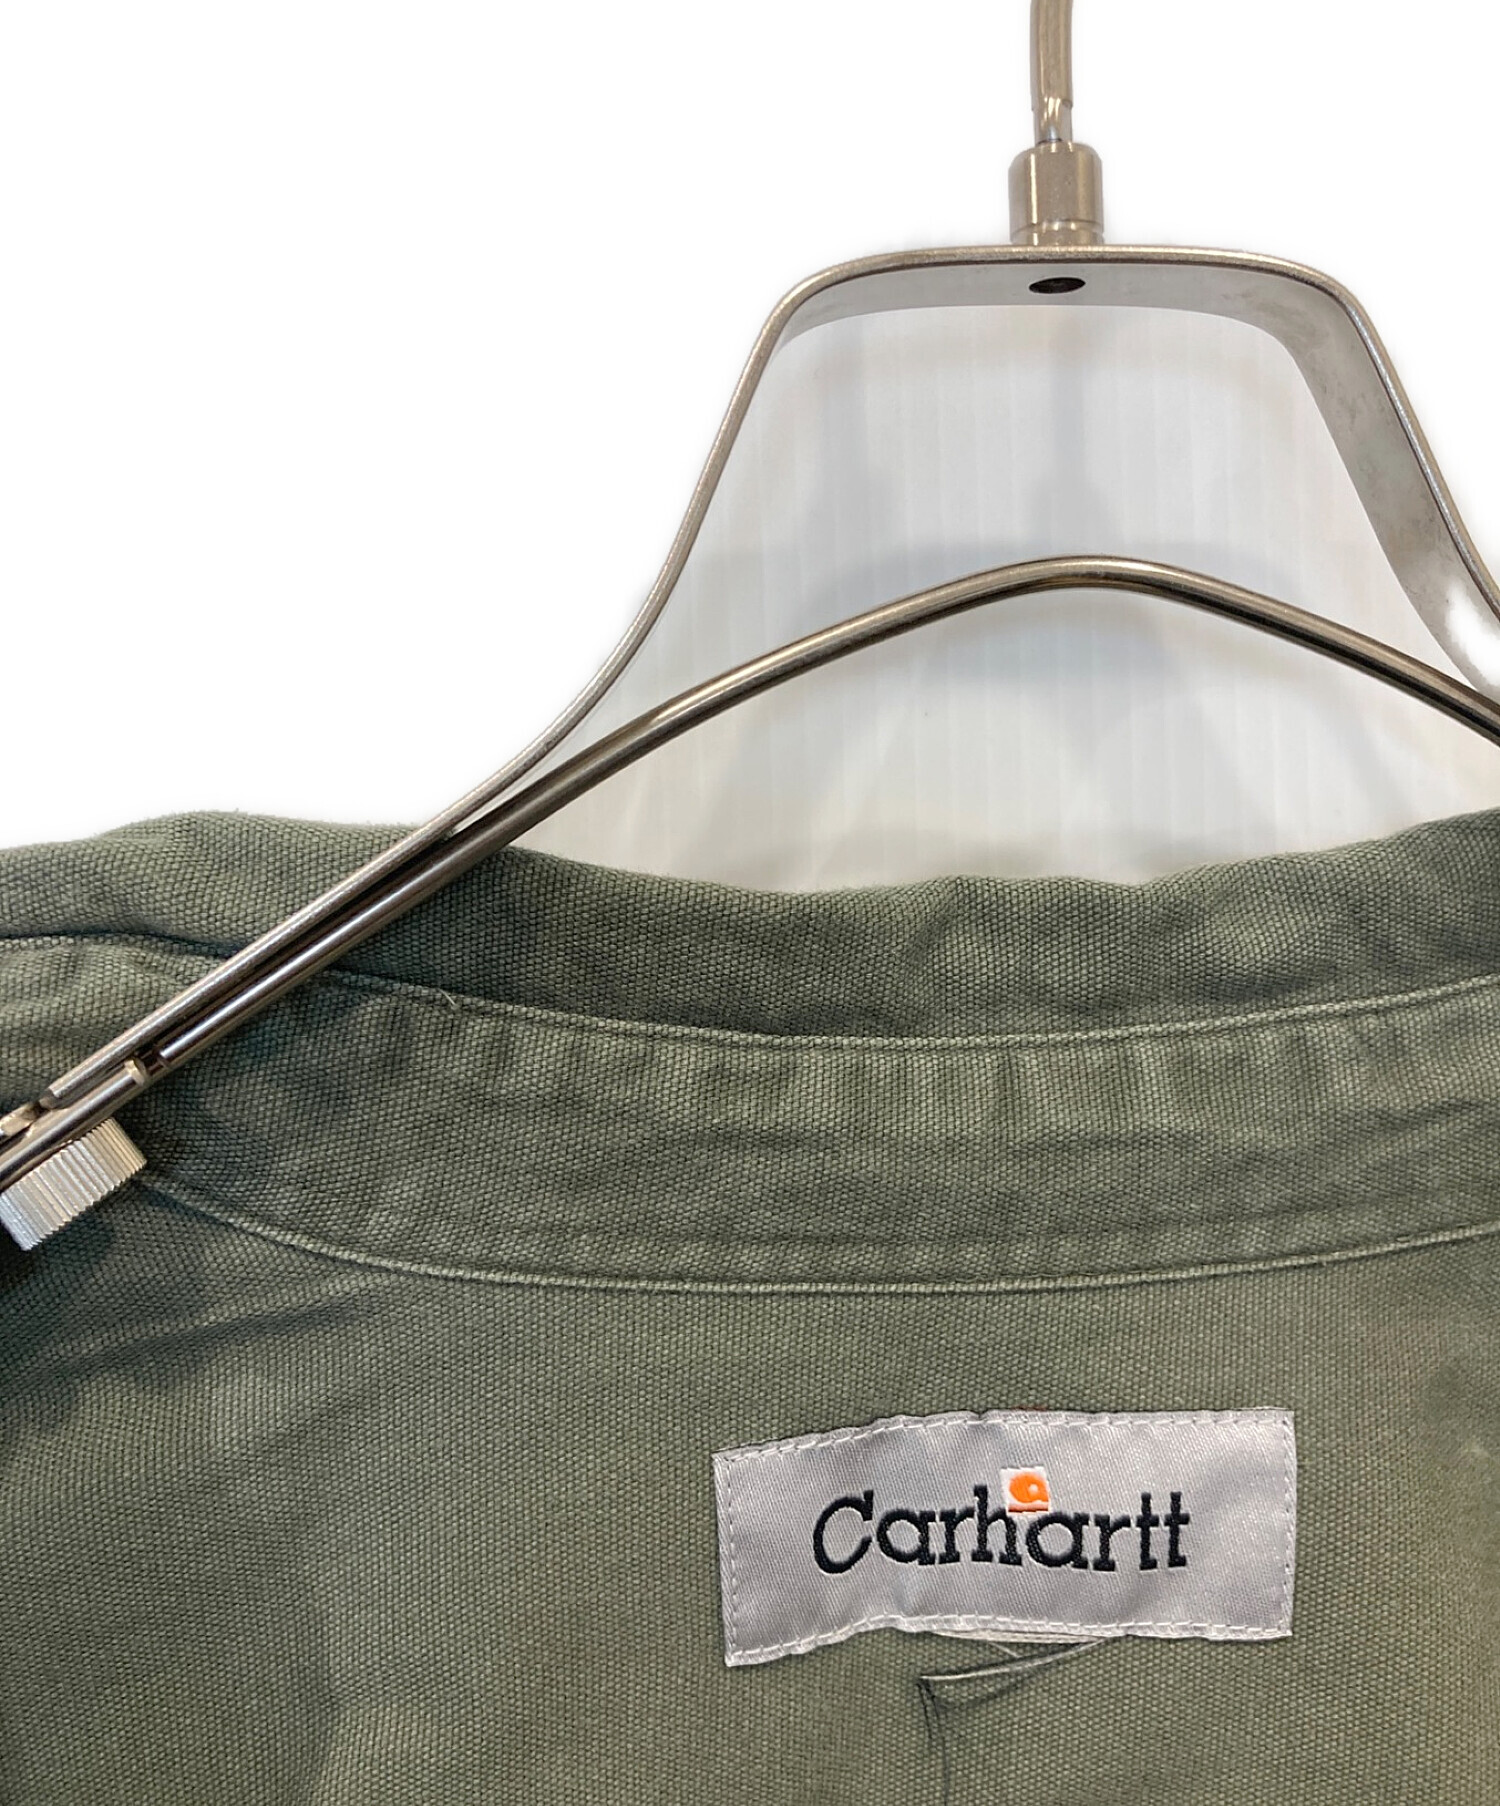 CarHartt (カーハート) 旧タグボタンボタンダウンシャツ グリーン サイズ:不明